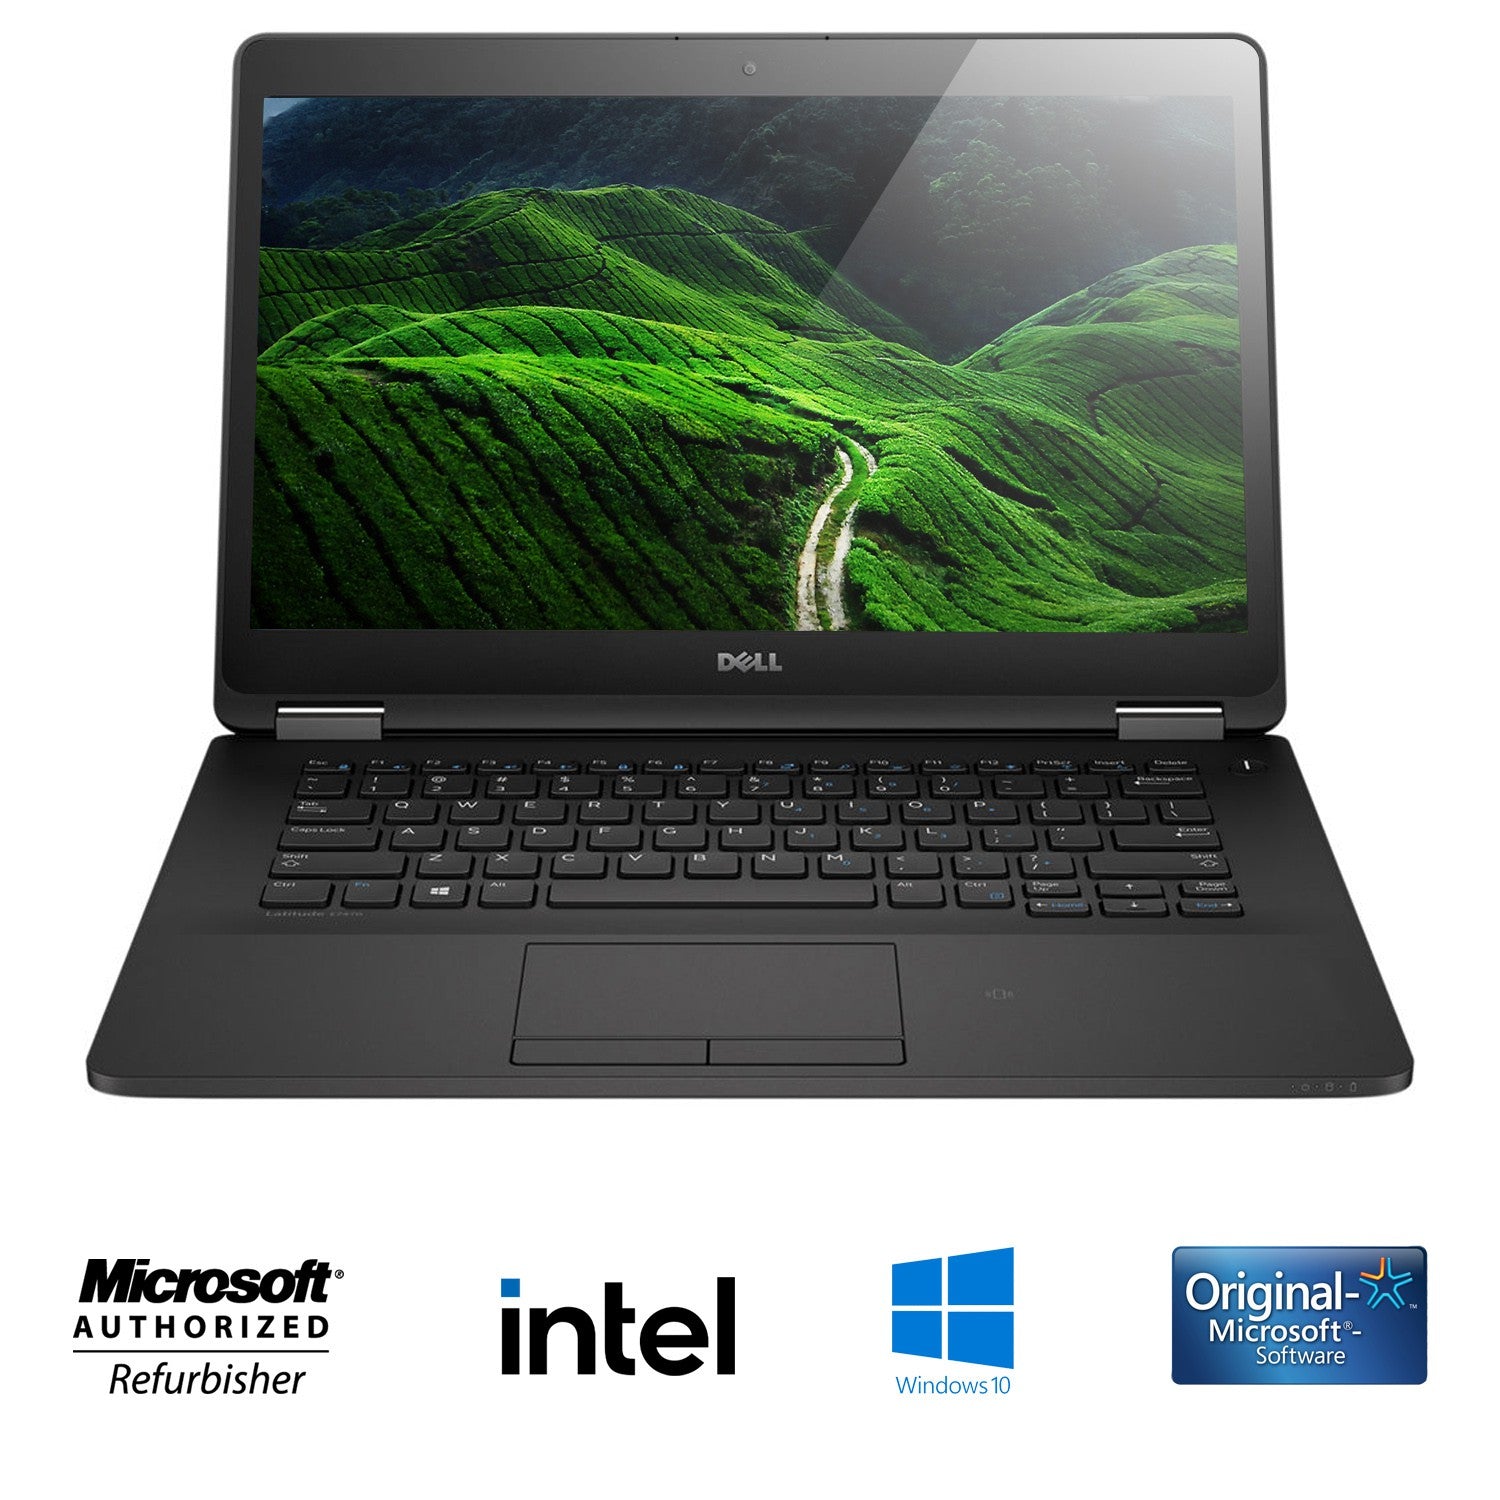 Dell Latitude E7270 12.5-inch FHD Touch Screen Laptop Intel Core i7 6th Gen 6600u Up to 3.40 GHz 8GB - 16GB DDR4 RAM 256GB - 1TB SSD Backlit Keyboard /Webcam Windows 10 Professional- 64 Bit